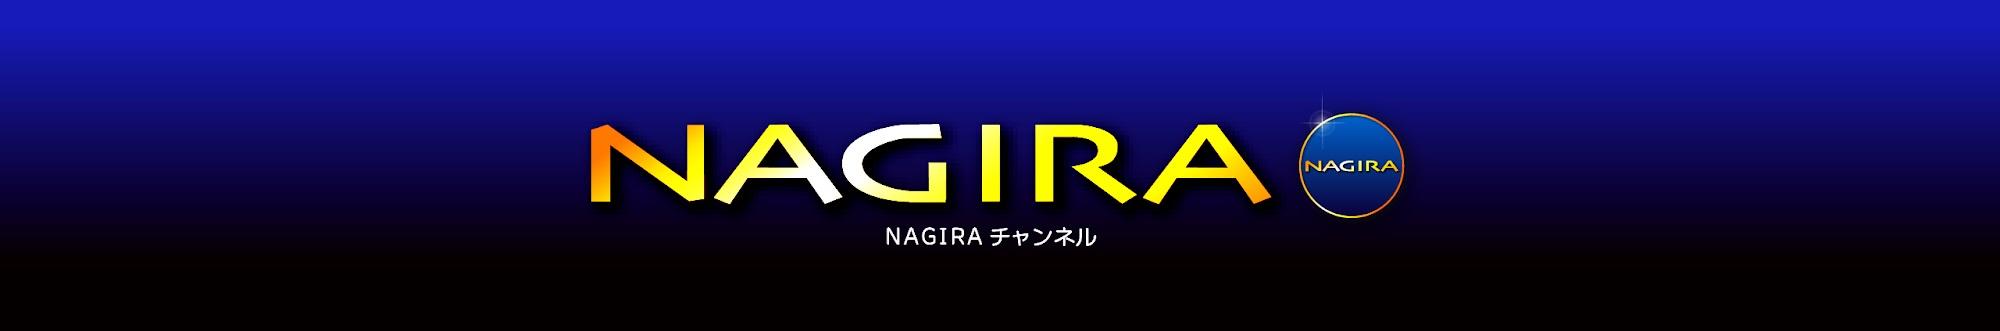 drama nagira【公式】